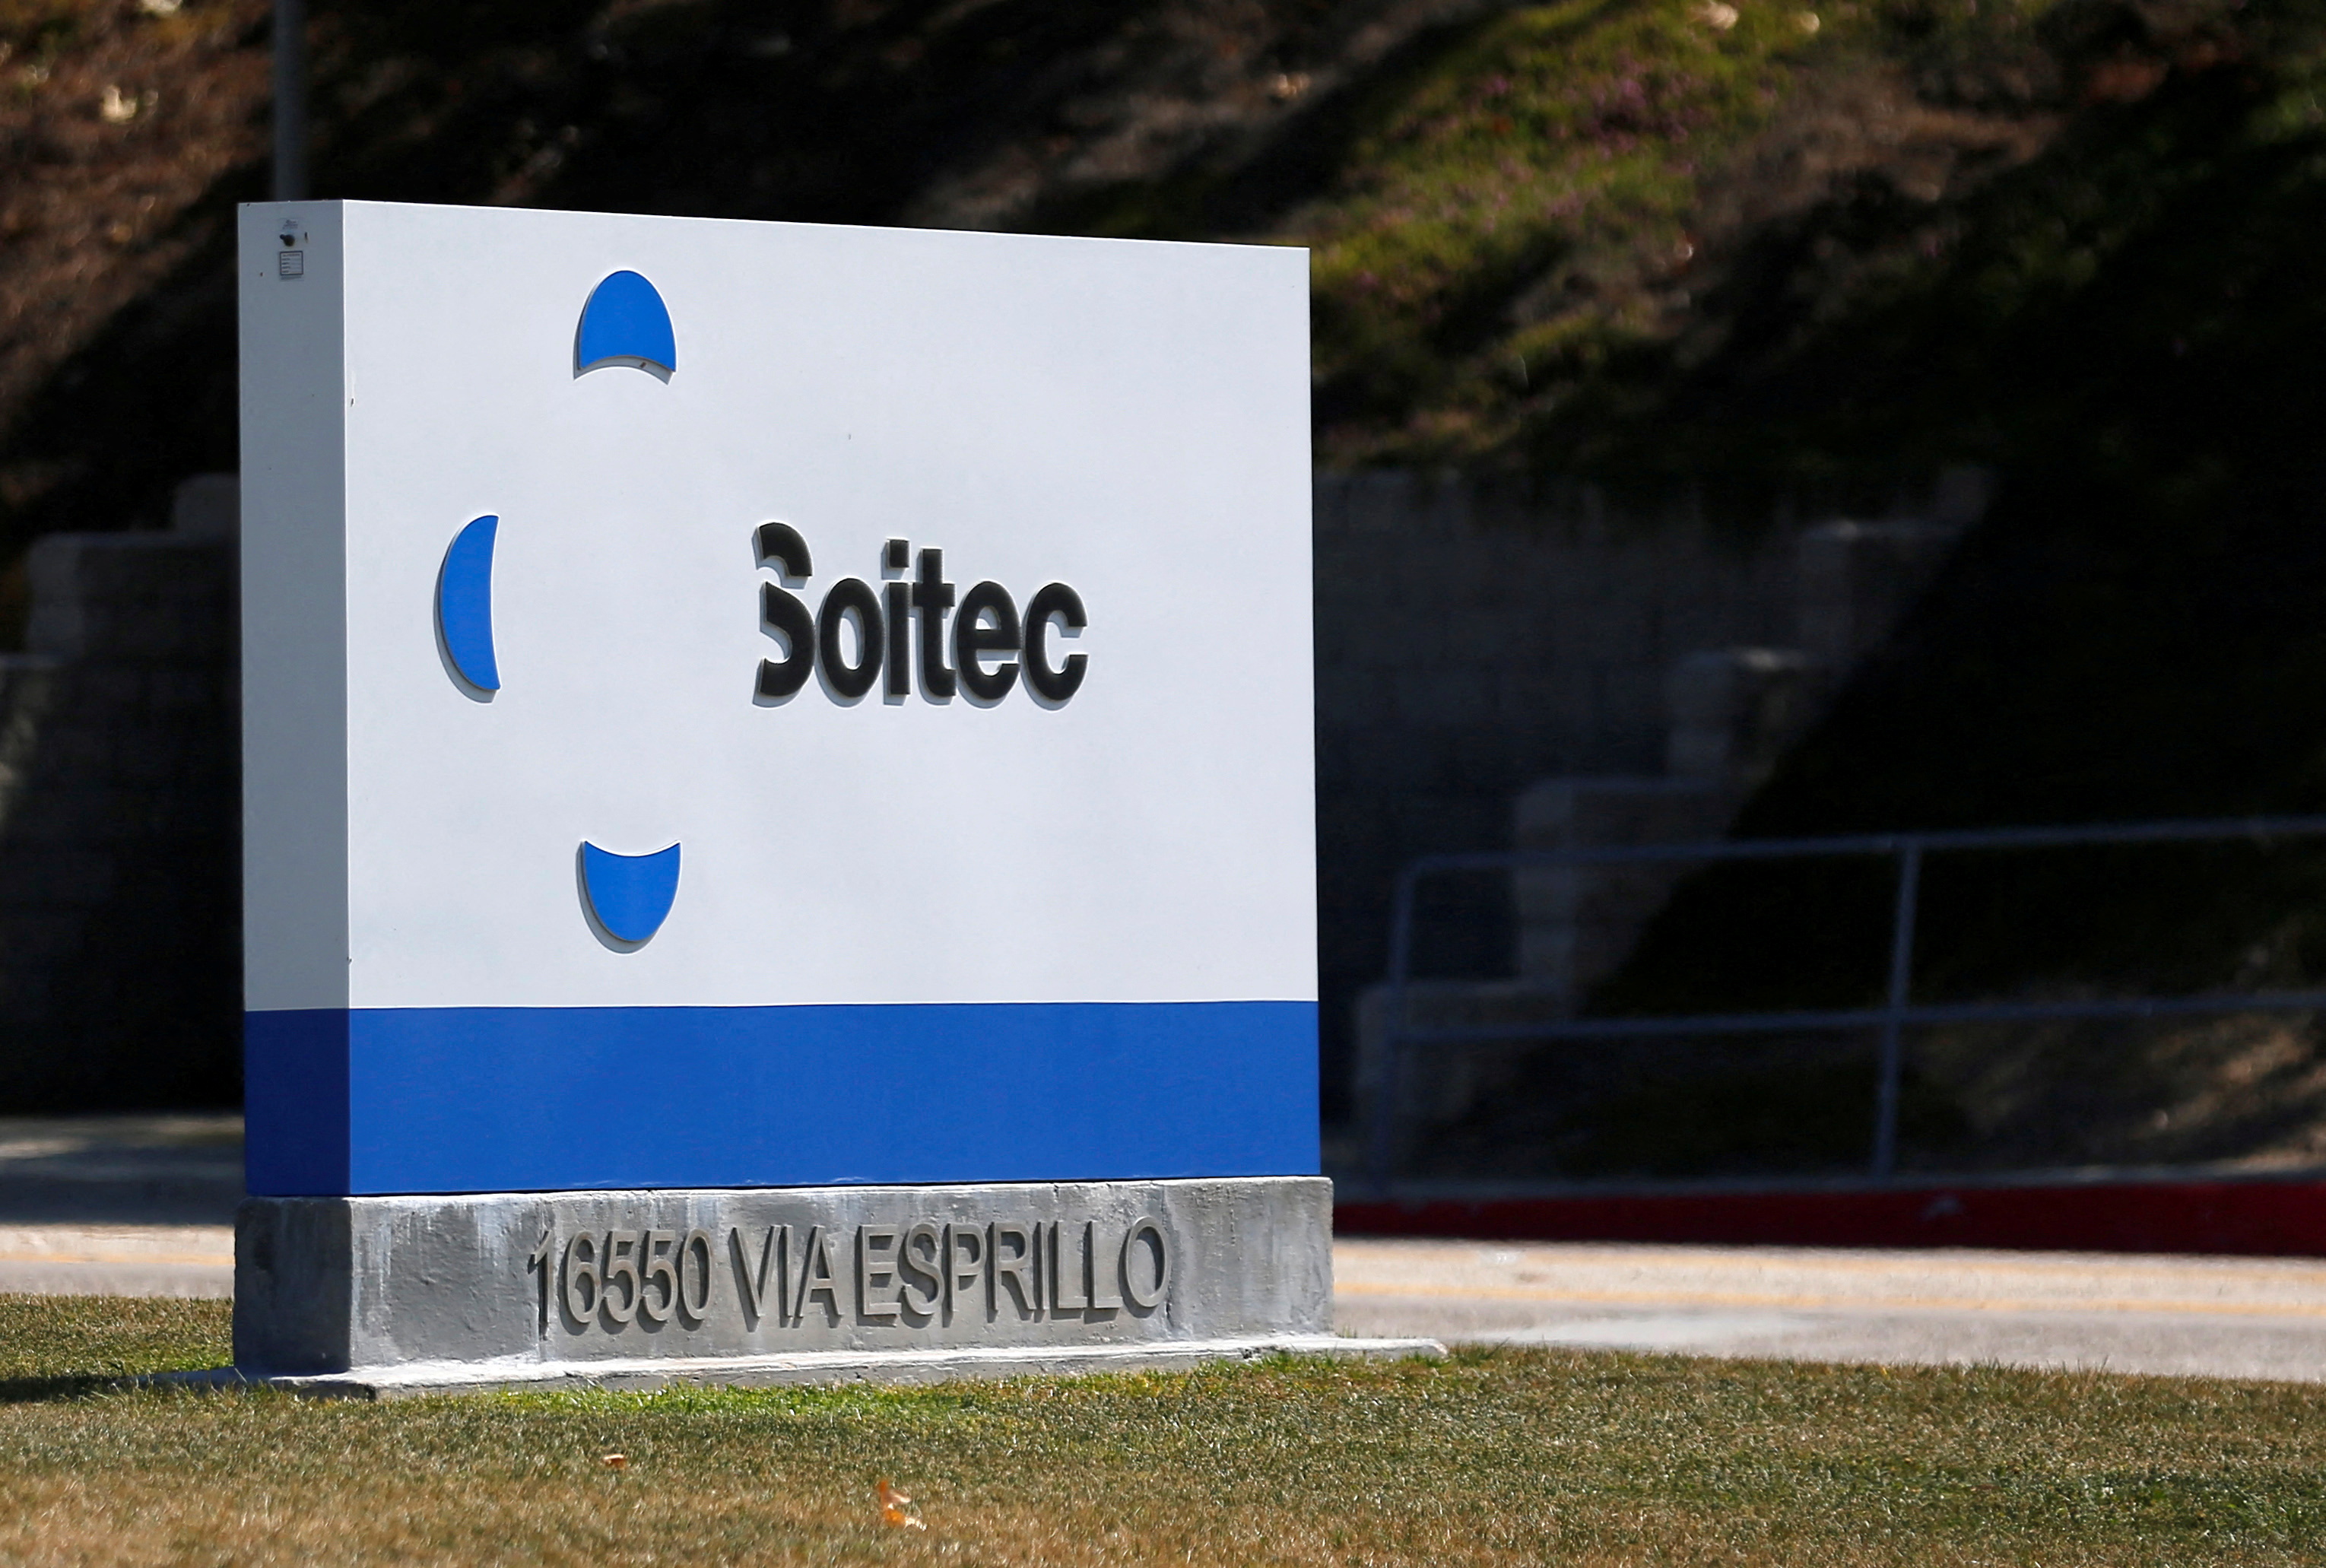 French company Soitec is shown in Rancho Bernardo, California